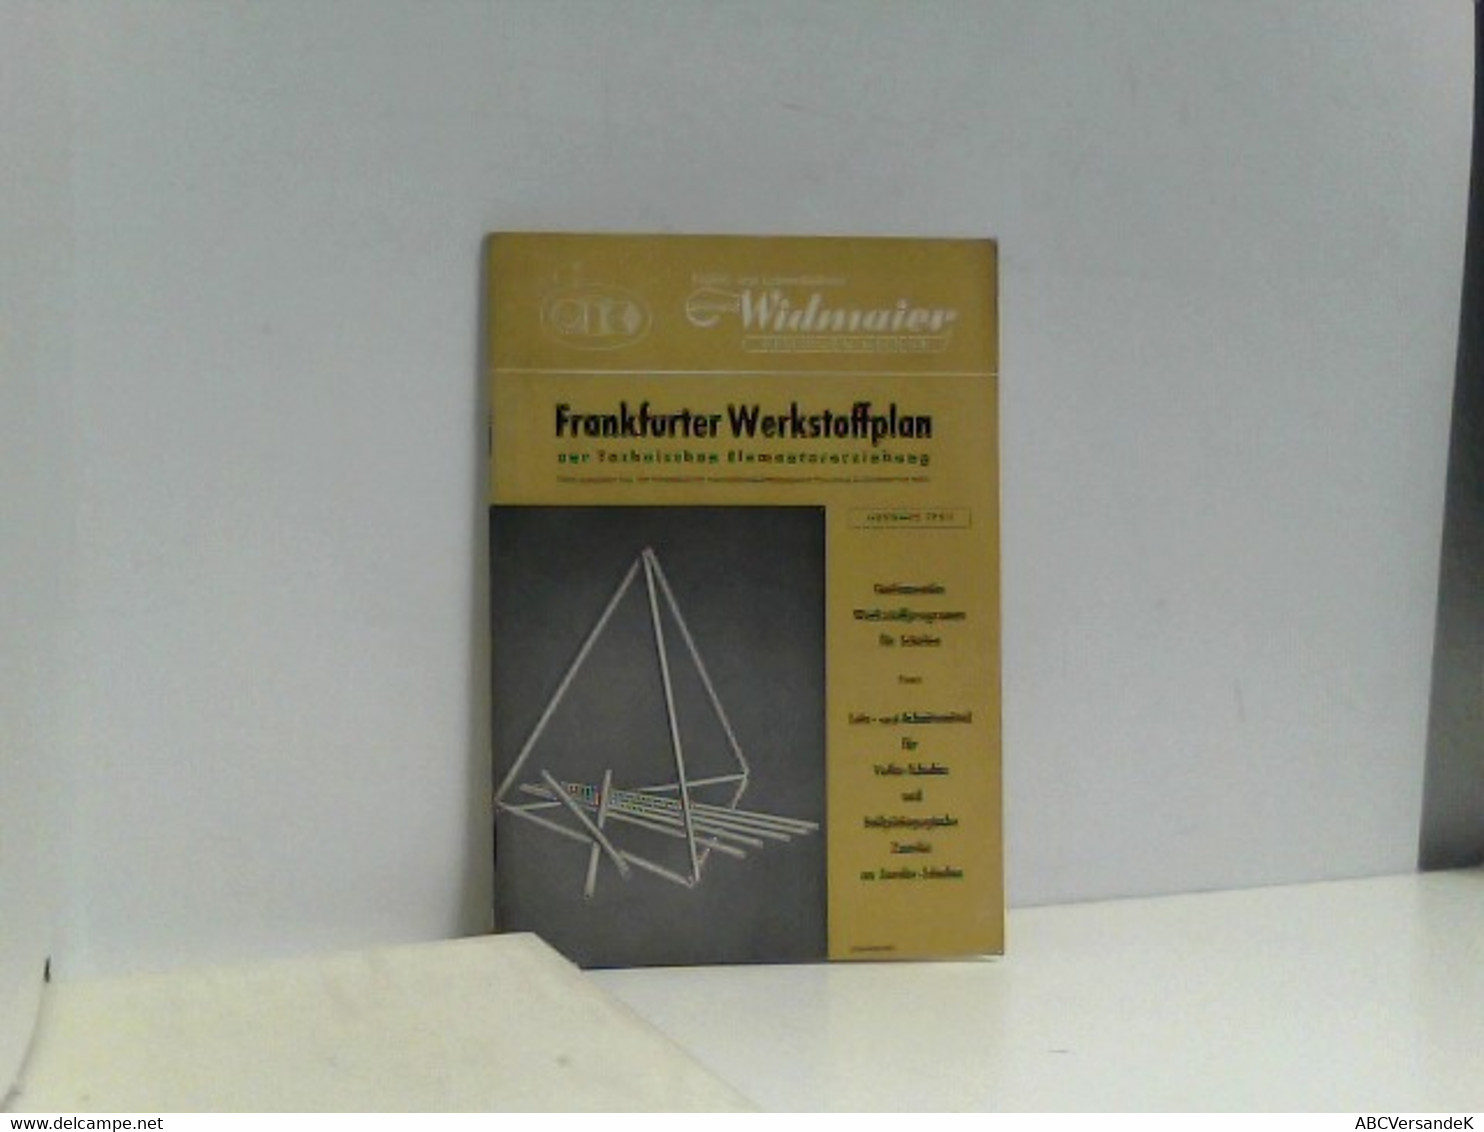 Frankfurter Werkstoffplan - Technical